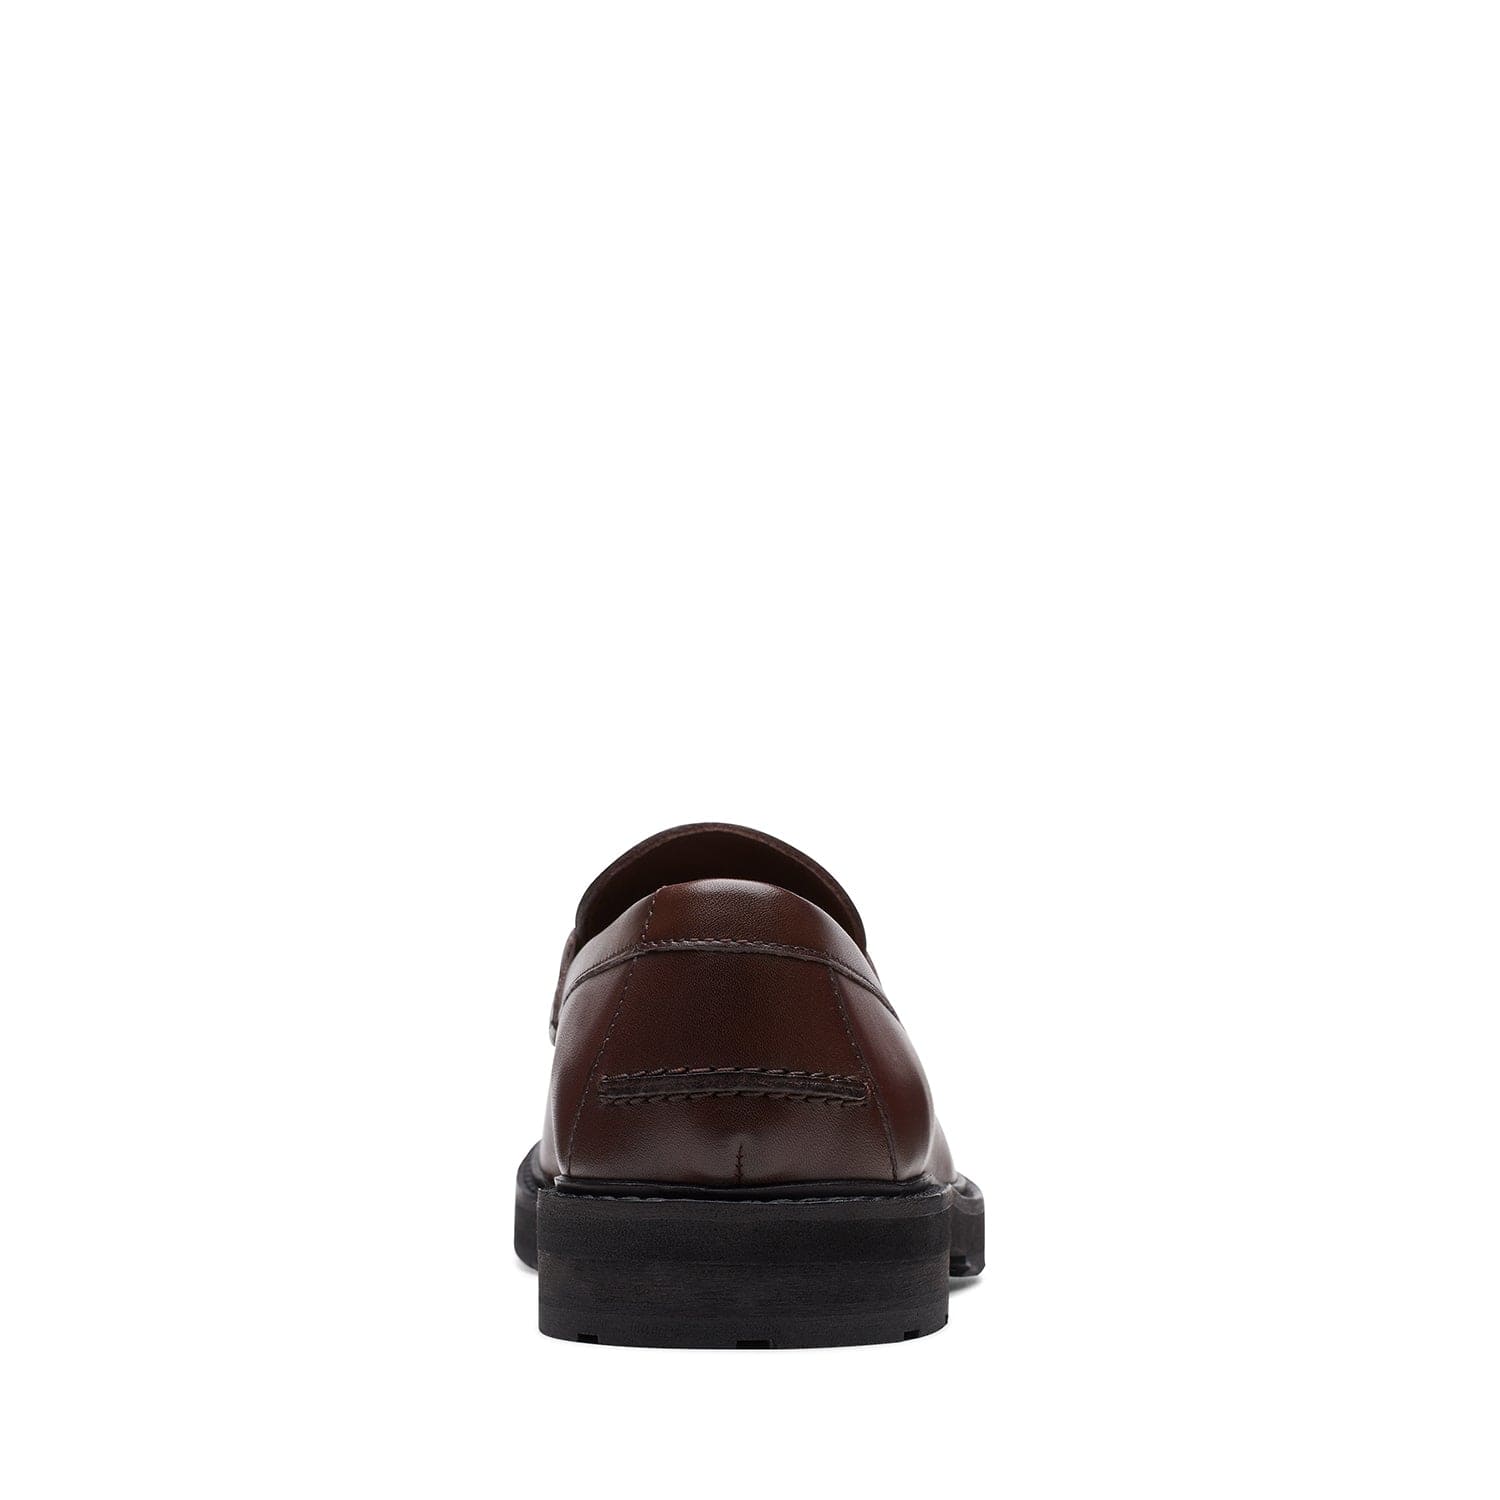 Clarks Craftnorth Lo - Shoes - British Tan Lea - 261709037 - G Width (Standard Fit)